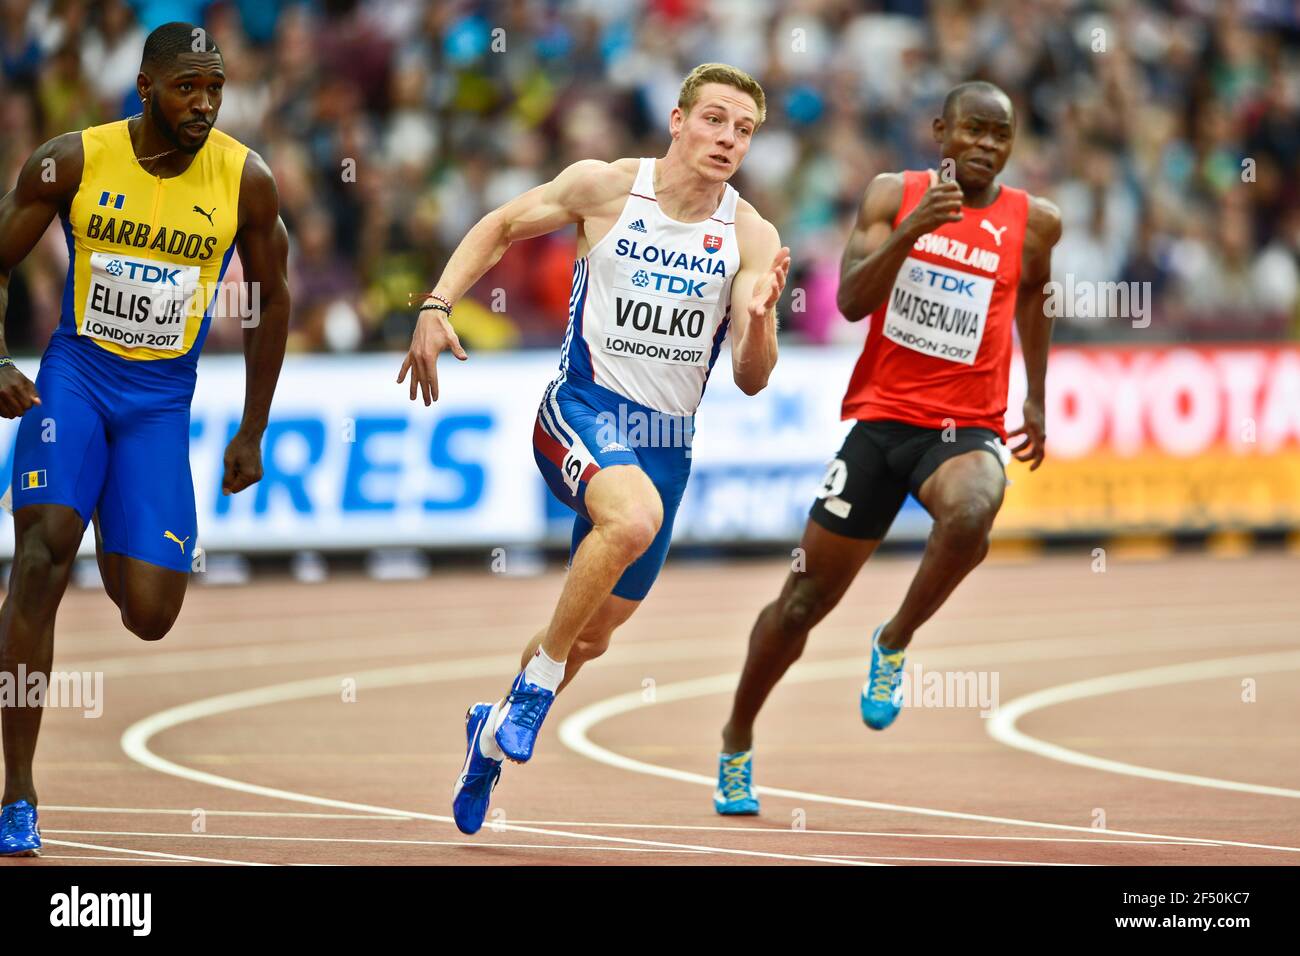 Jan Volko (Slovakia), Burkheart Ellis Jr (Barbados), Sibusiso Matsenjwa (Swaziland). 200 metres men, heats. IAAF World Championships London 2017 Stock Photo